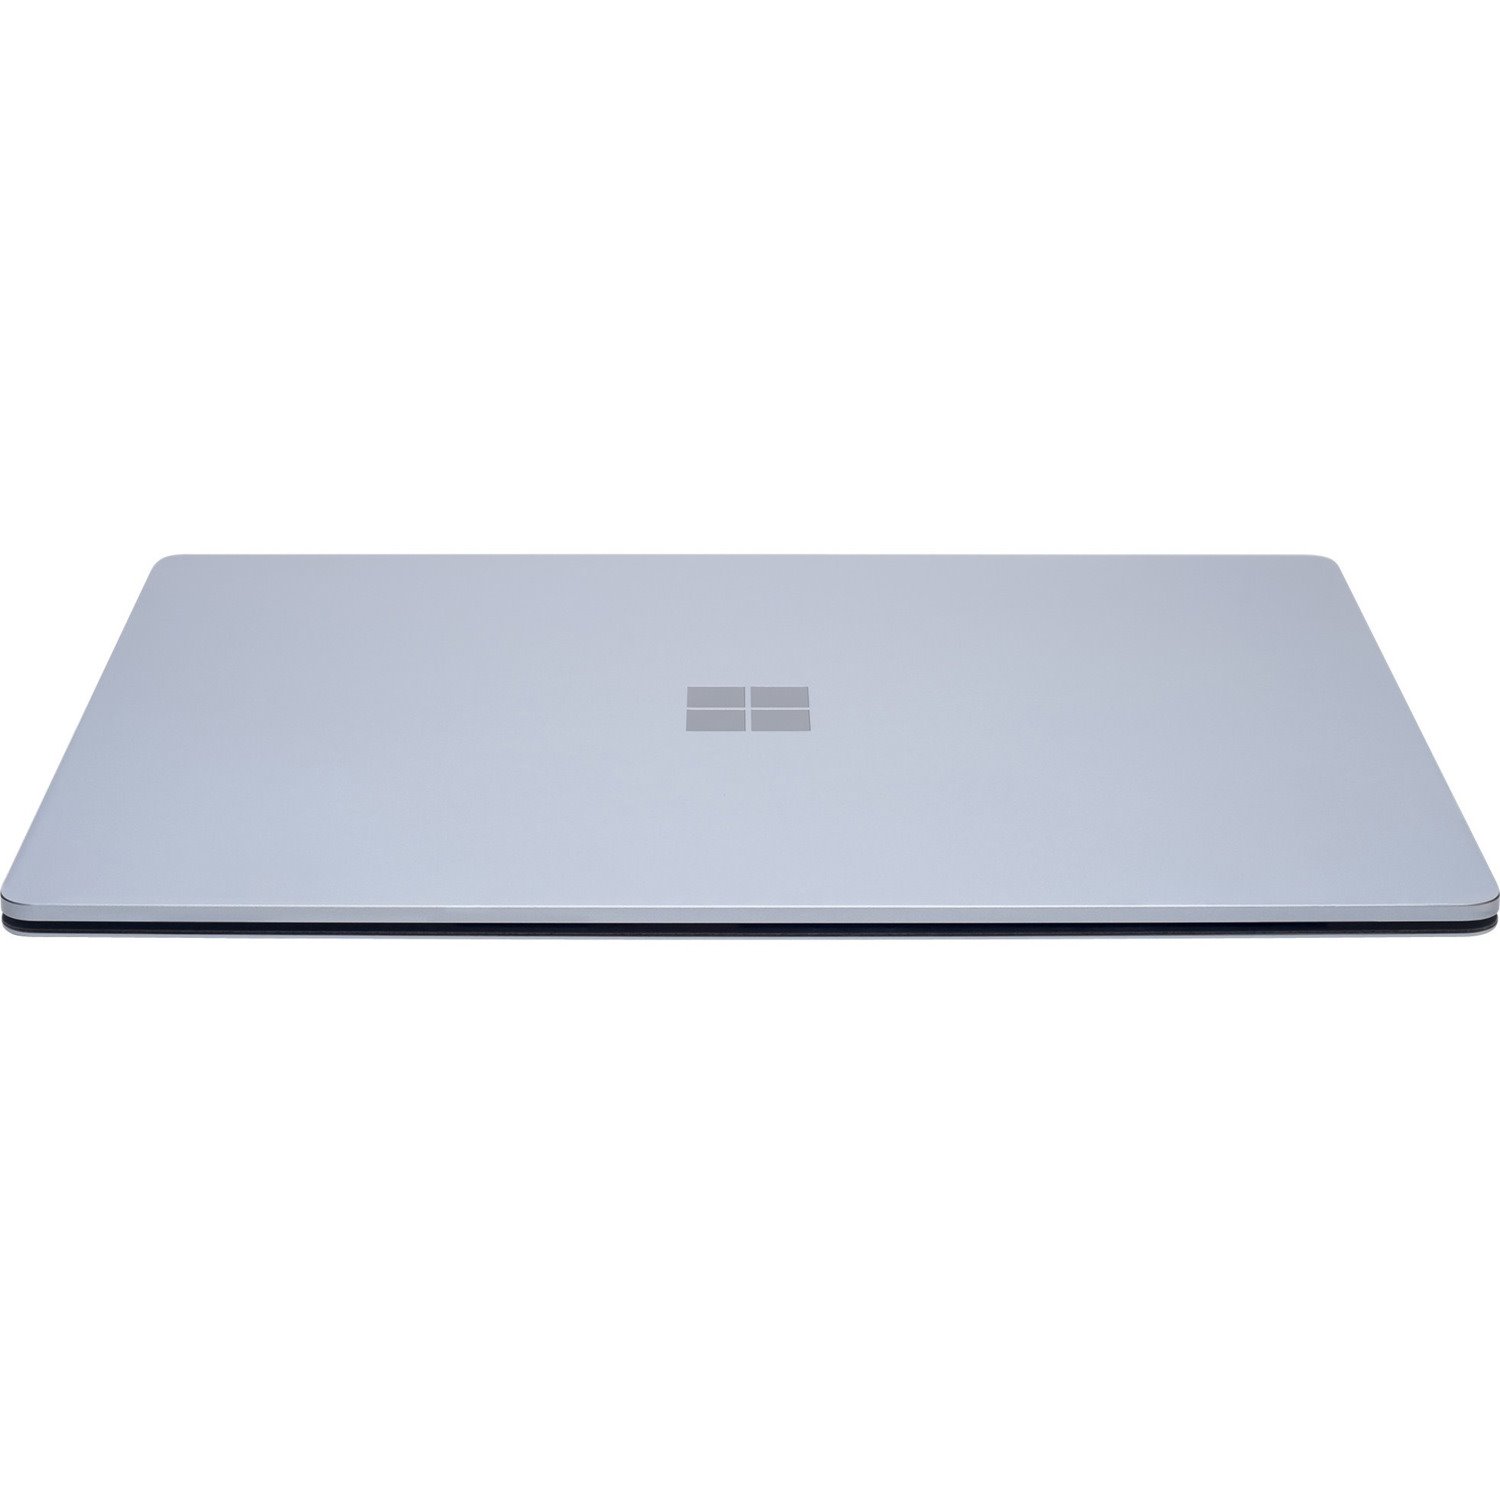 Microsoft Surface Laptop 4 13.5" Touchscreen Notebook - 2256 x 1504 - Intel Core i7 11th Gen i7-1185G7 Quad-core (4 Core) - 16 GB Total RAM - 512 GB SSD - Ice Blue